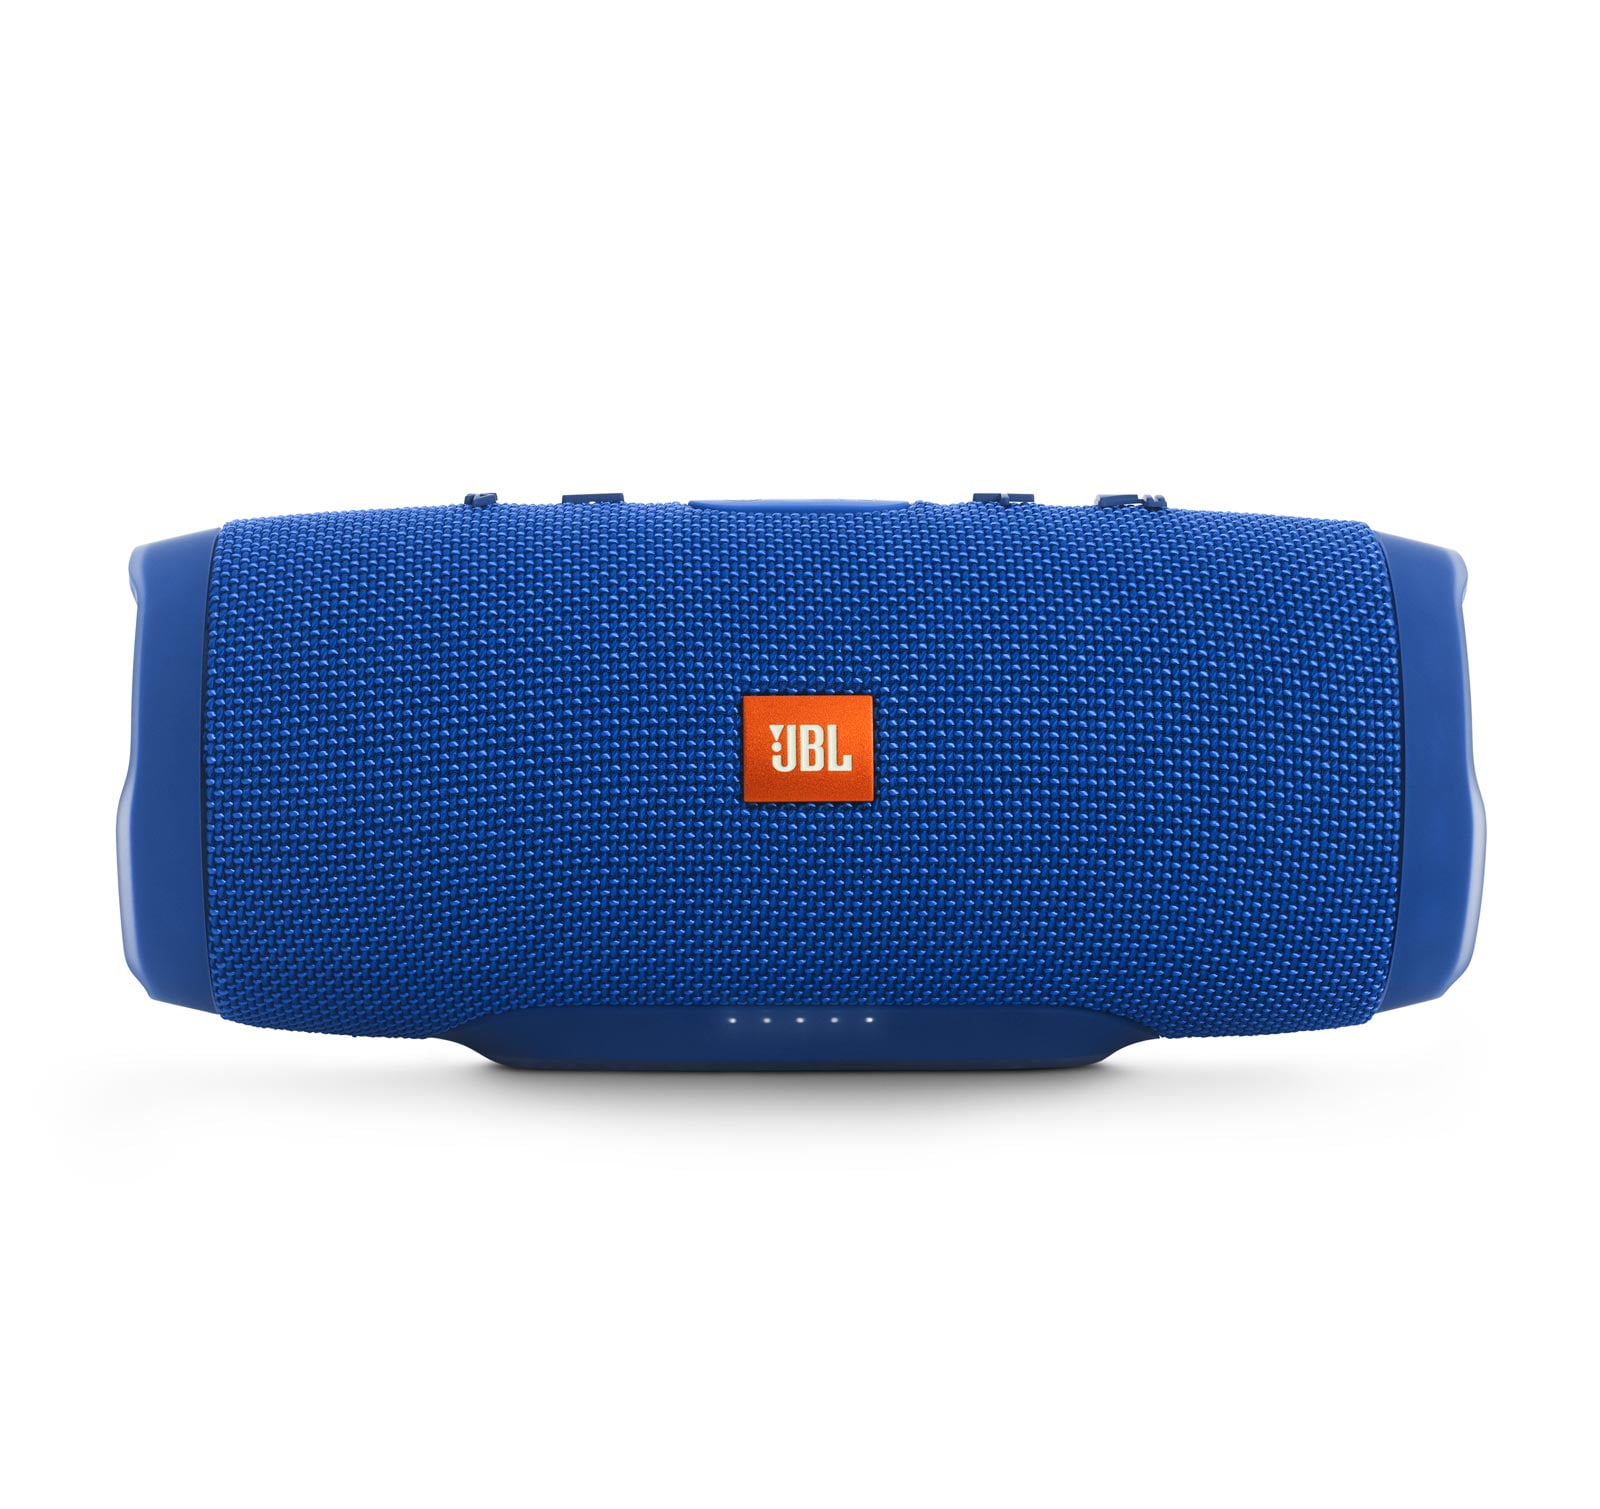 JBL Charge 3 Blue Portable Bluetooth Speaker – Walmart Inventory